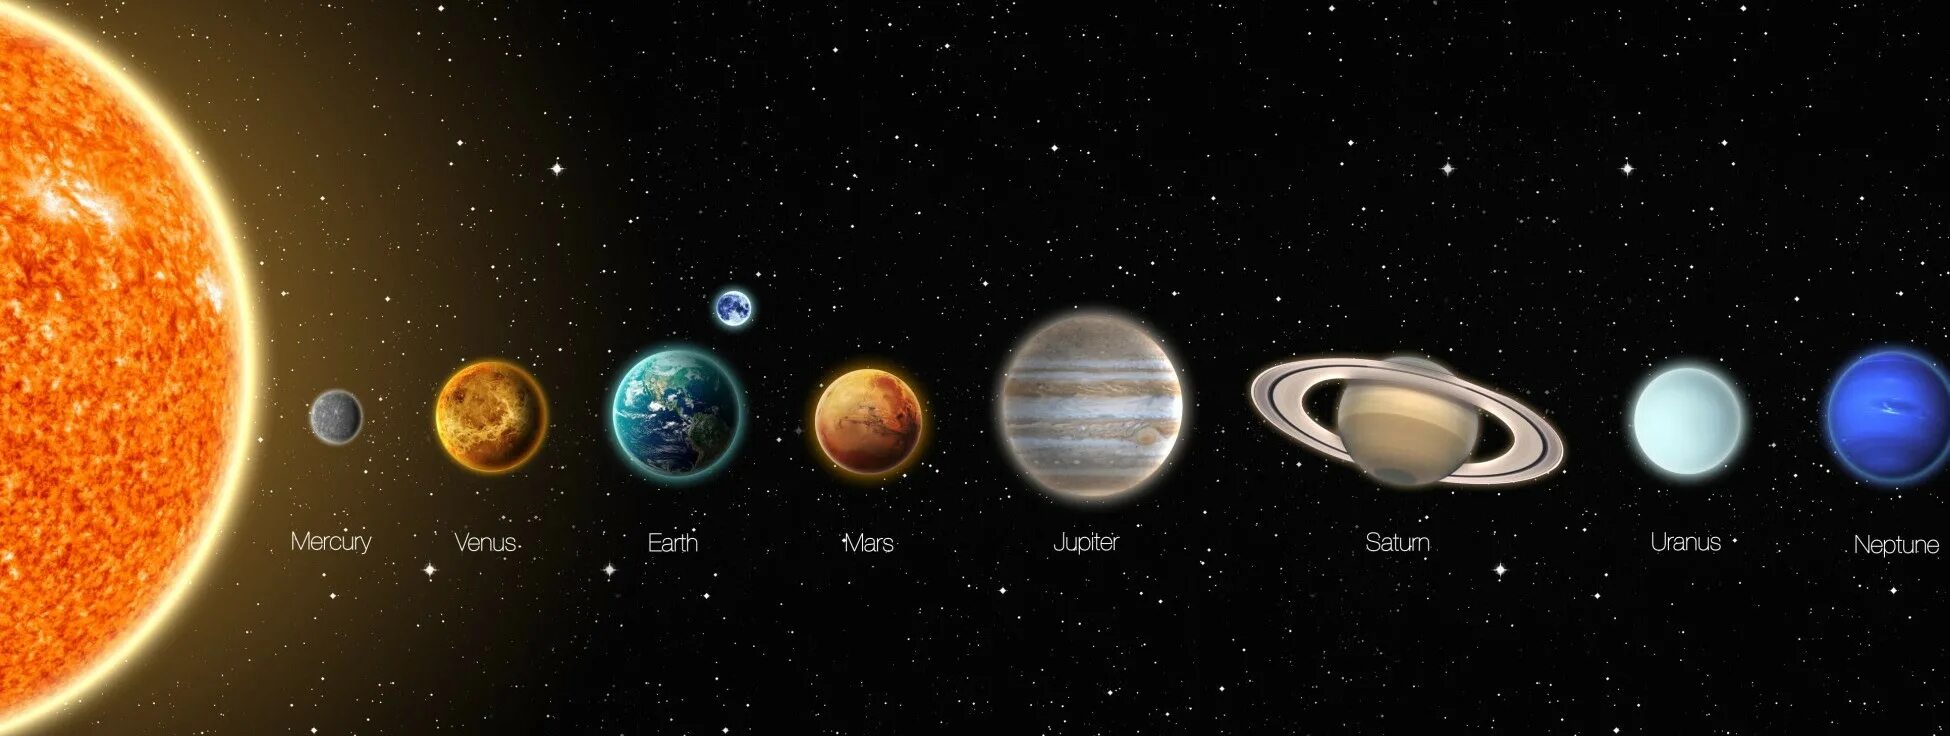 Планет солнечной системы больше земли. Меркурий Венера земля Марс Юпитер Сатурн Уран Нептун. Меркурий Венера земля Марс. Планеты солнечной системы Меркурий Венера. Меркурий Венера земля Марс Юпитер.